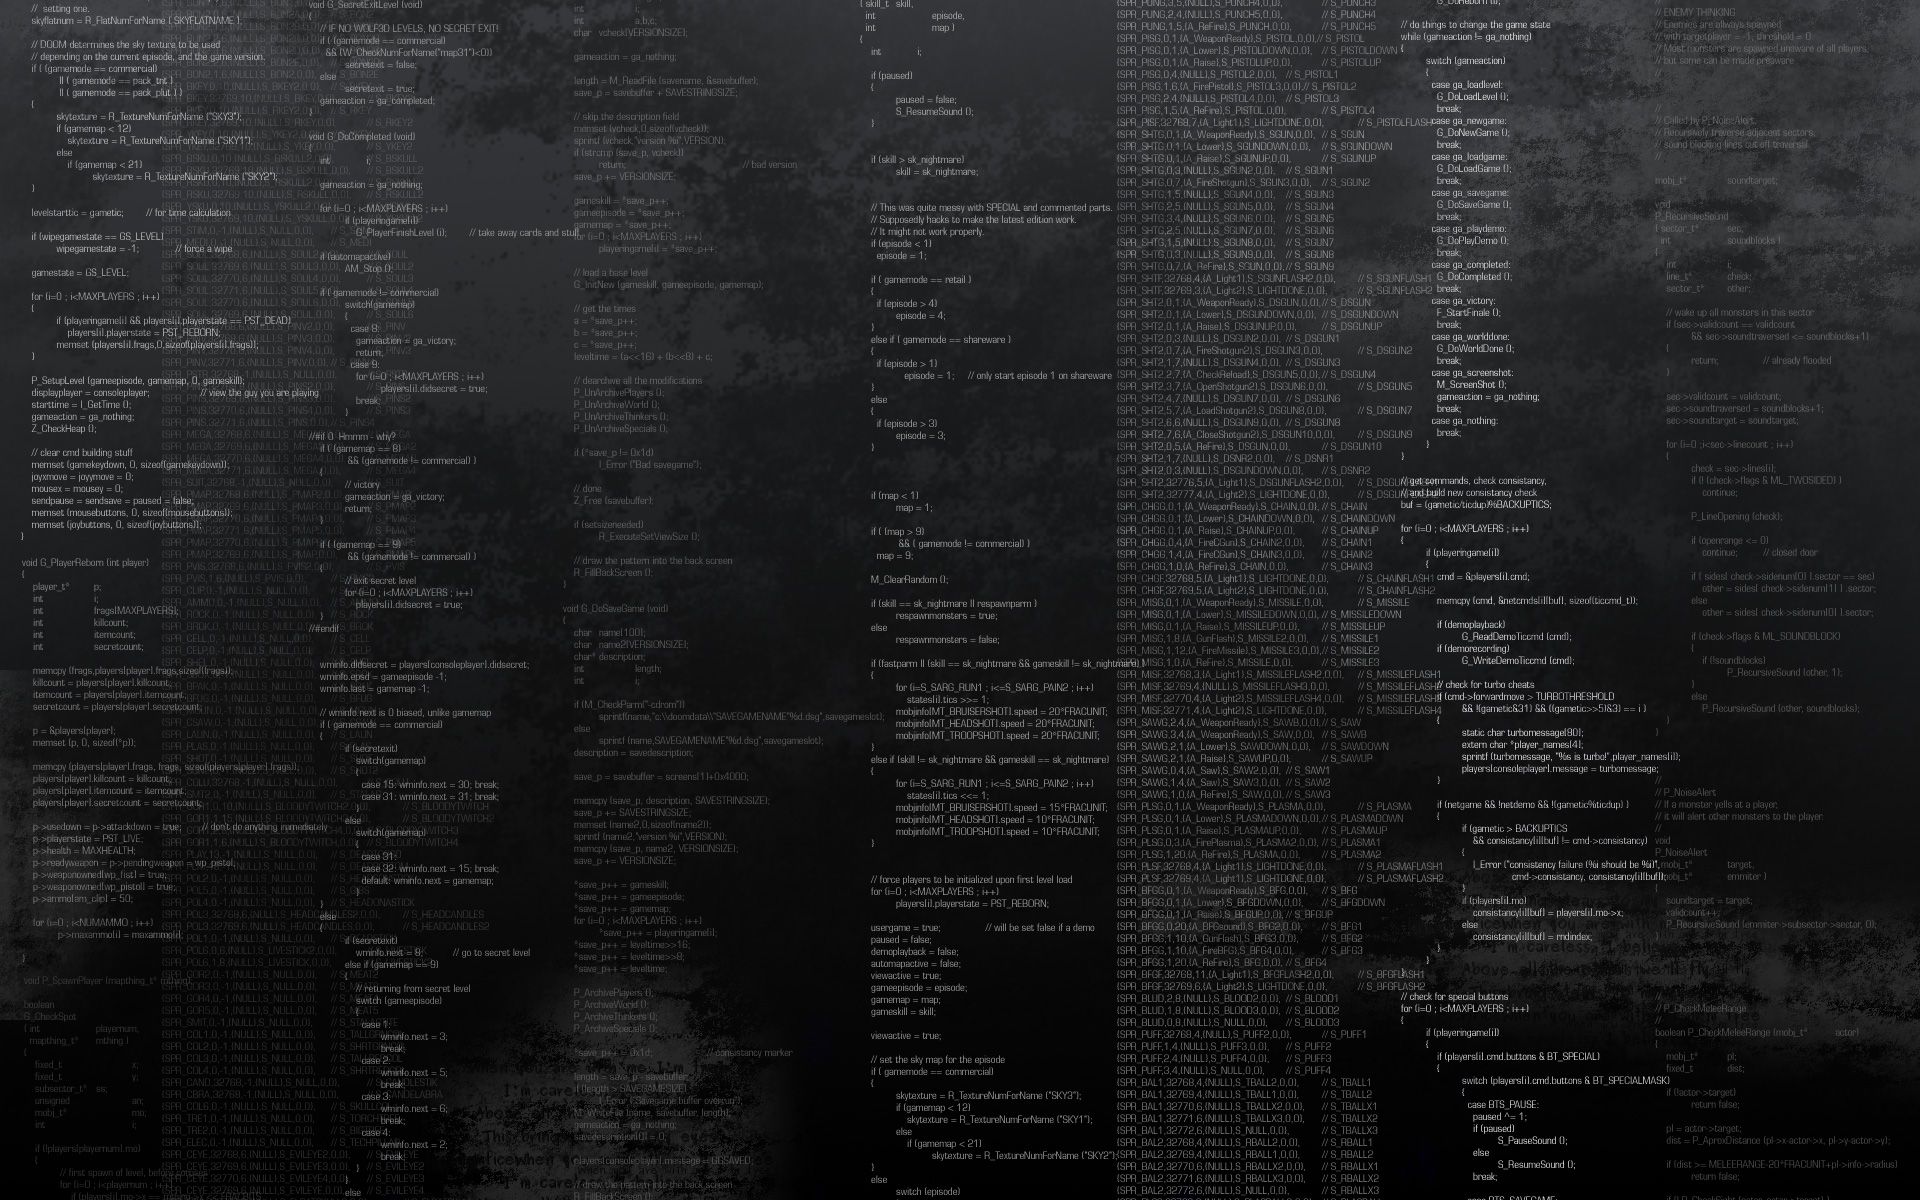 Code Black Wallpapers